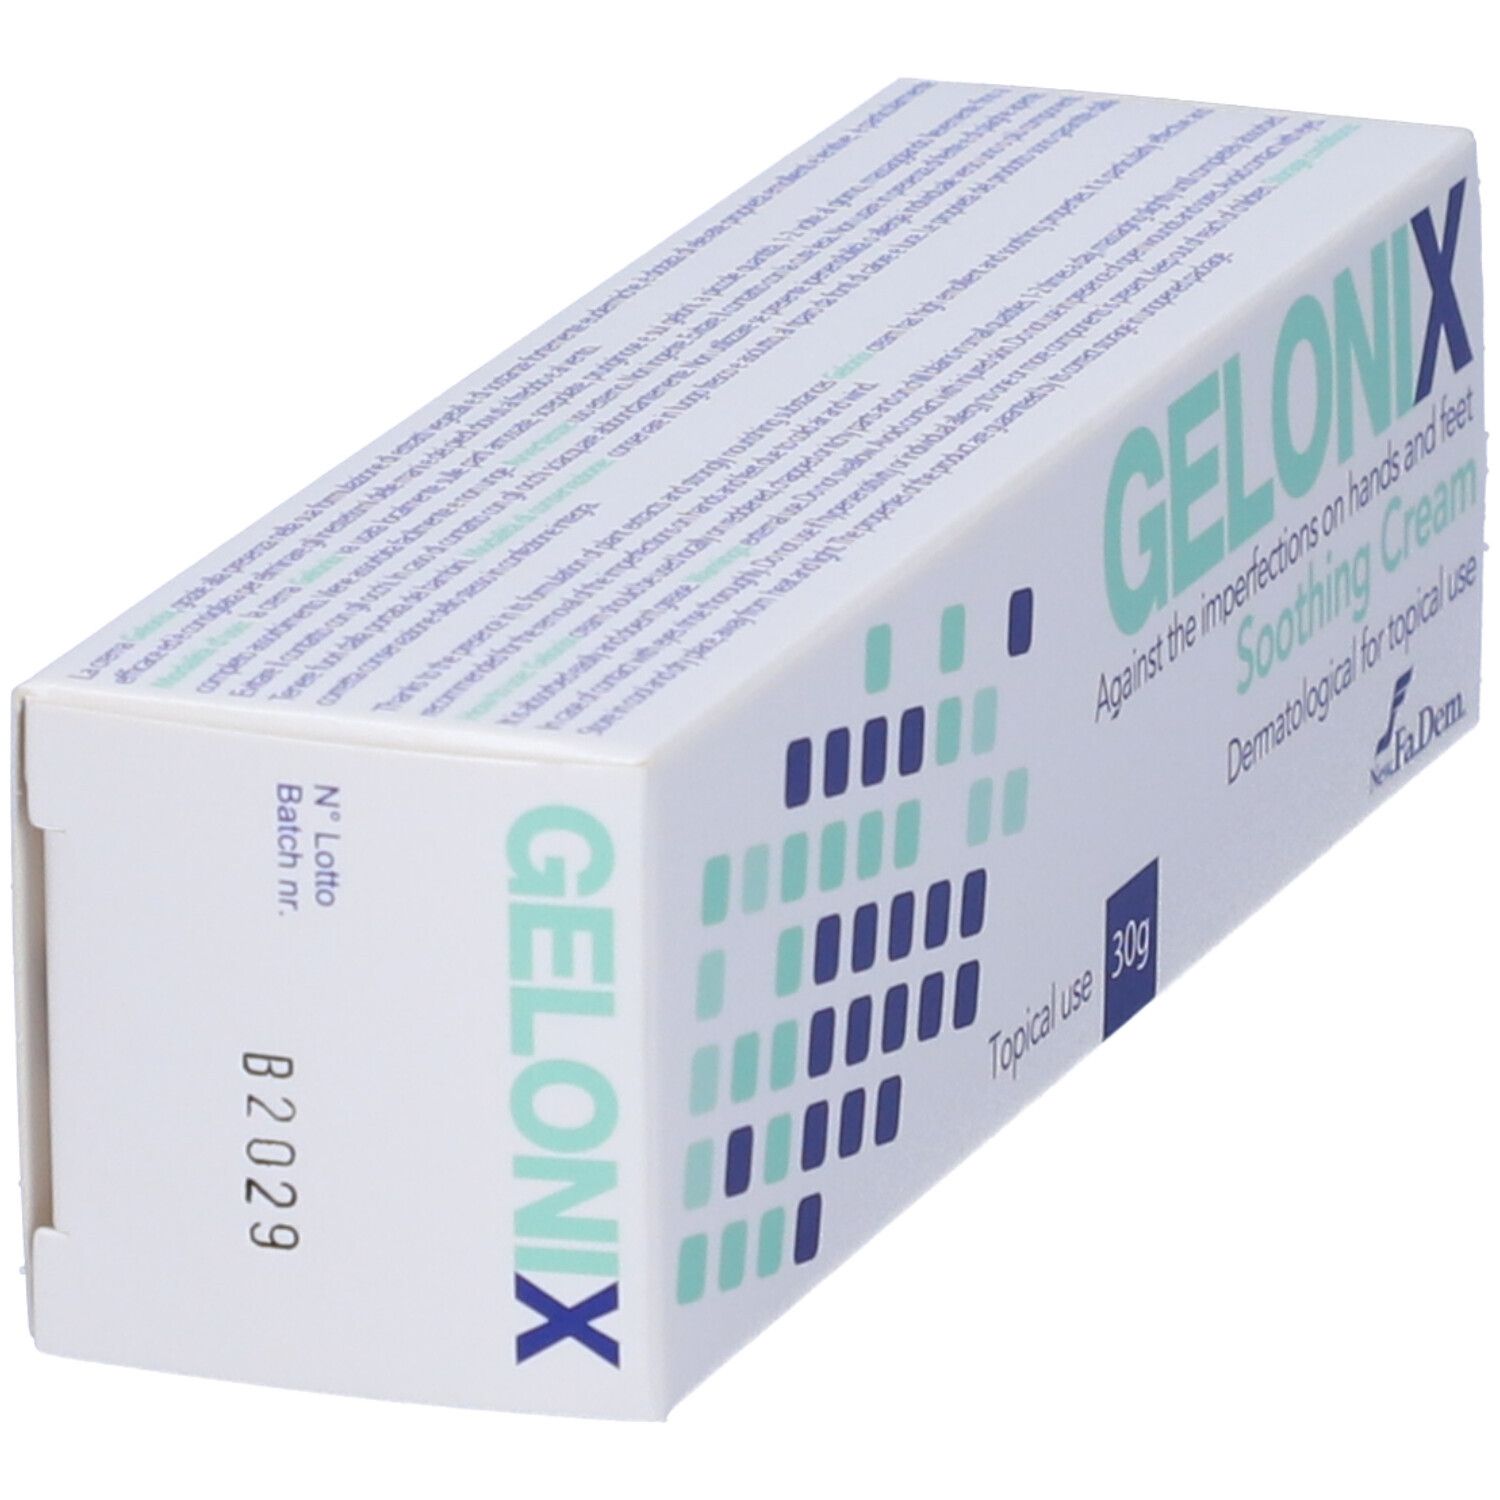 Gelonix Crema Lenitiva